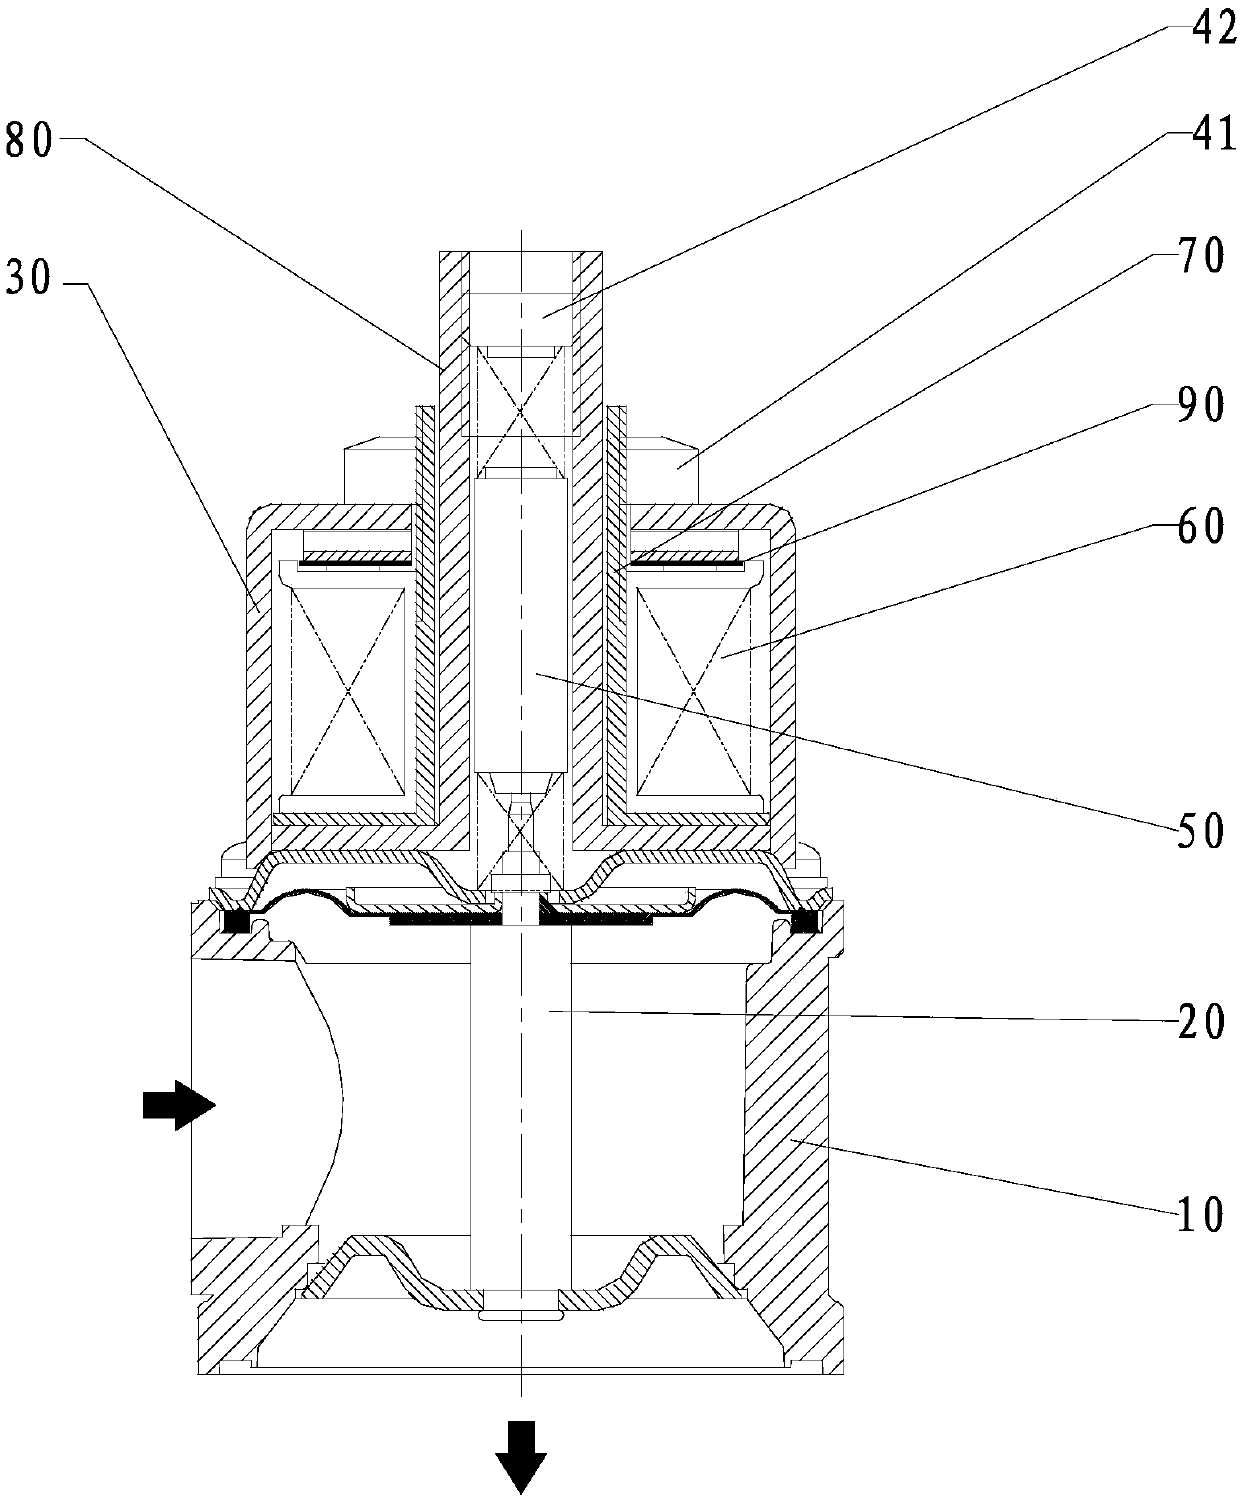 Fuel gas proportional valve